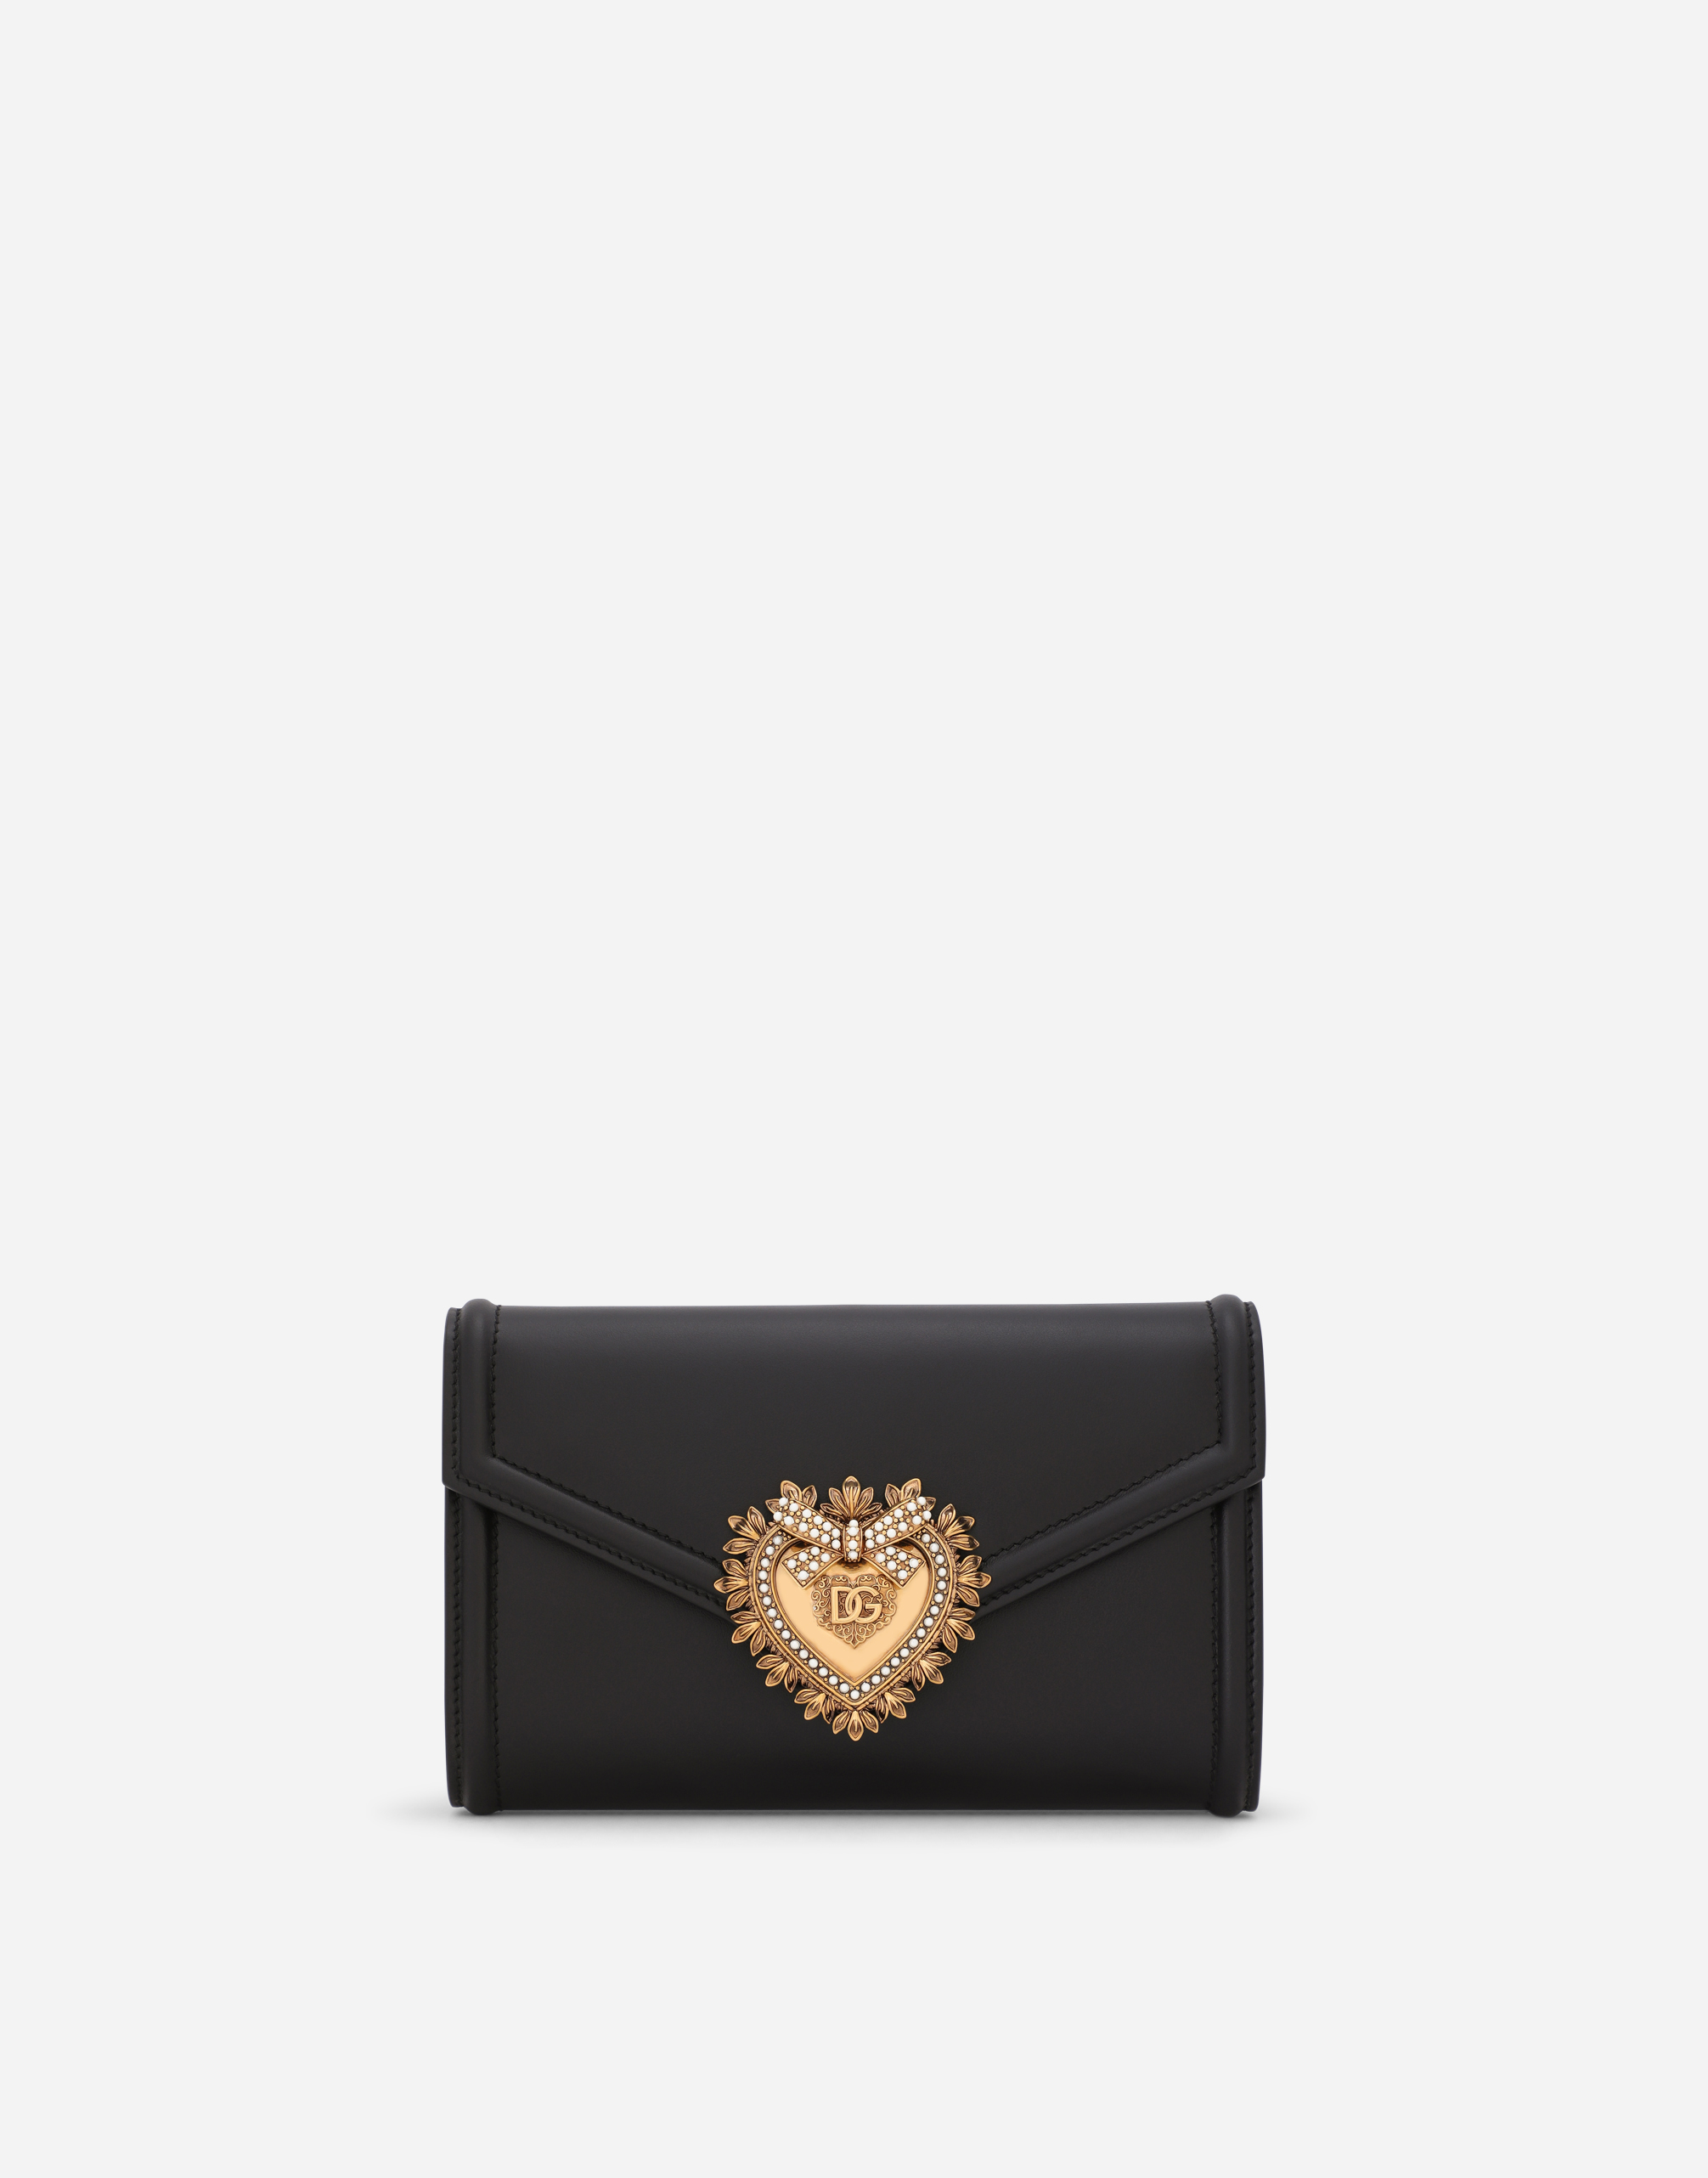 Dolce & Gabbana Calfskin Devotion Mini Bag In Black